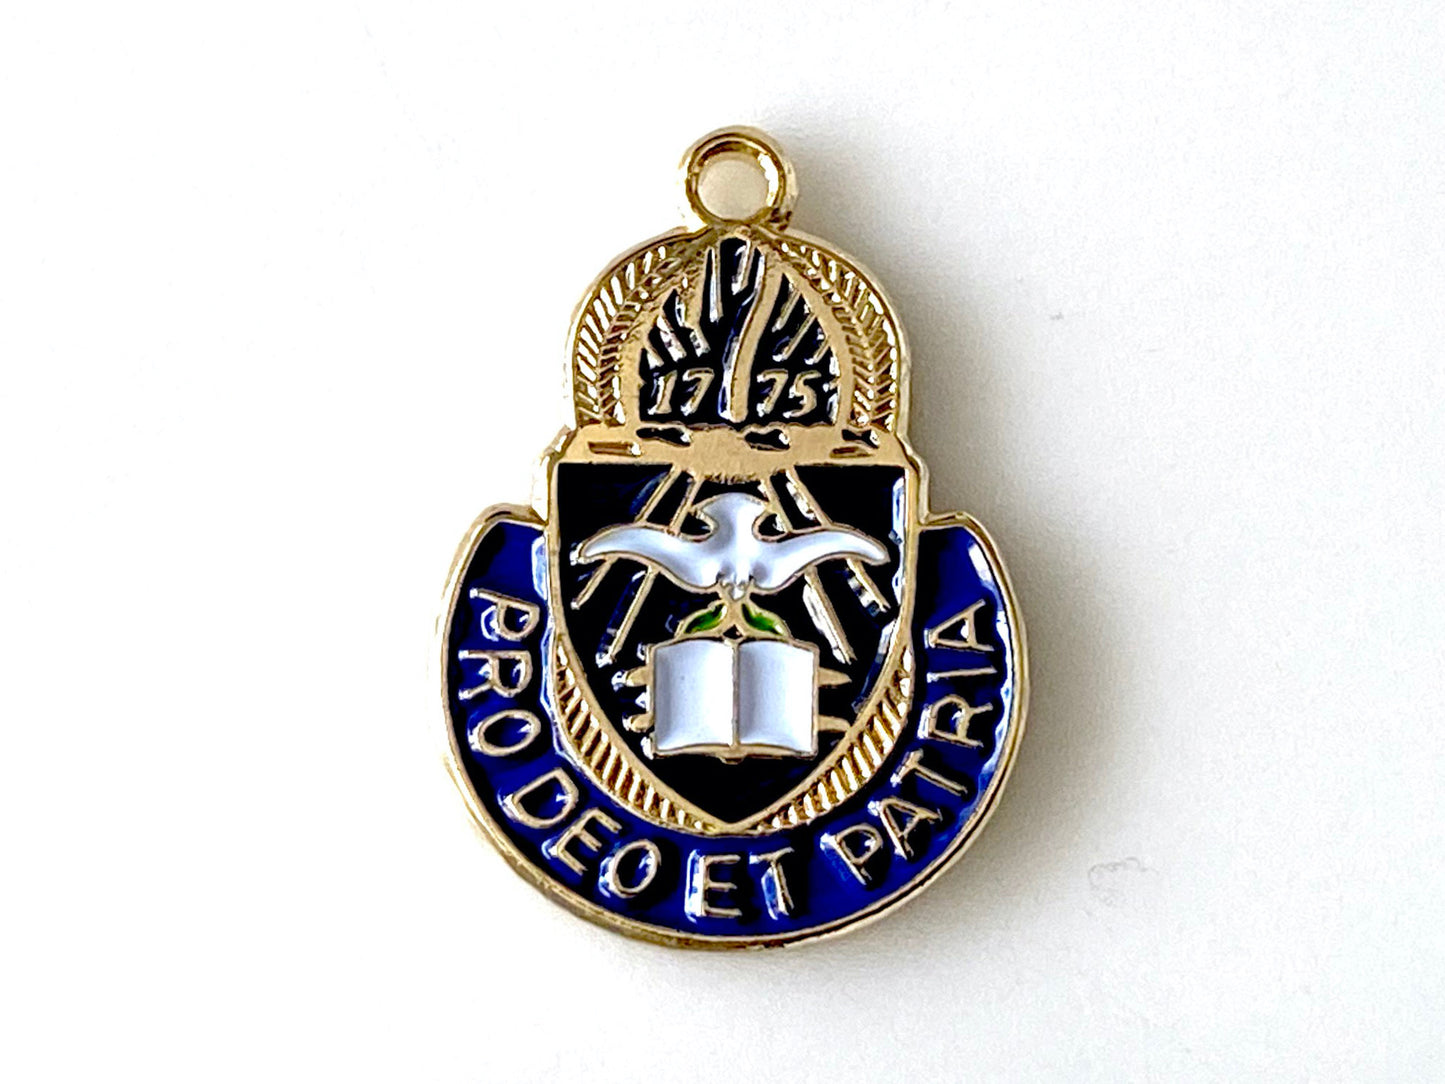 Jewelry Bar | Chaplain Corps - Army Branch Charm